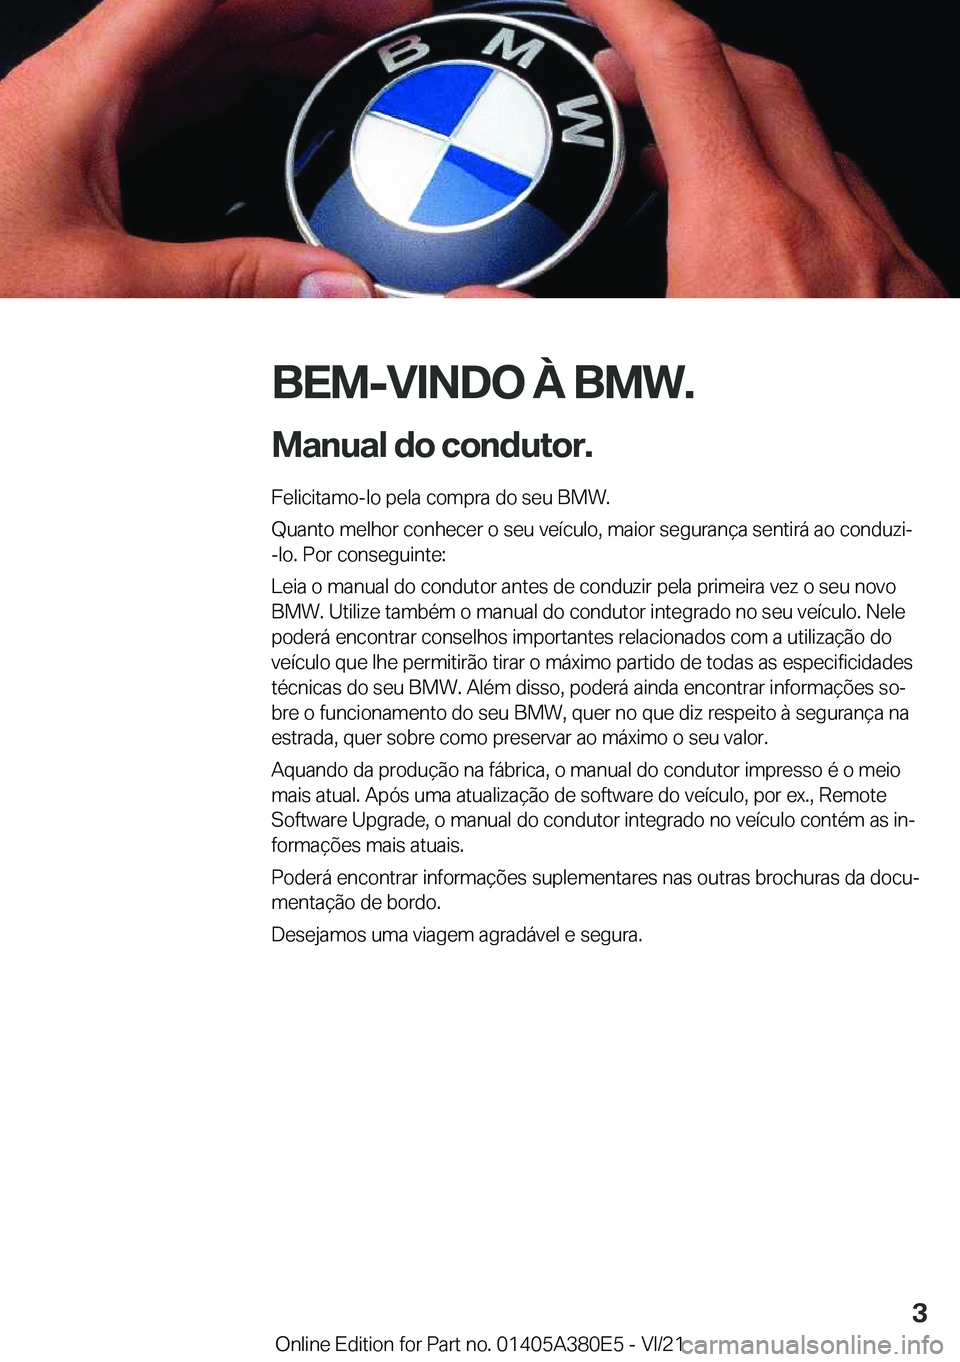 BMW 5 SERIES 2022  Manual do condutor (in Portuguese) �B�E�M�-�V�I�N�D�O��À��B�M�W�.
�M�a�n�u�a�l��d�o��c�o�n�d�u�t�o�r�. �F�e�l�i�c�i�t�a�m�o�-�l�o��p�e�l�a��c�o�m�p�r�a��d�o��s�e�u��B�M�W�.
�Q�u�a�n�t�o��m�e�l�h�o�r��c�o�n�h�e�c�e�r��o��s